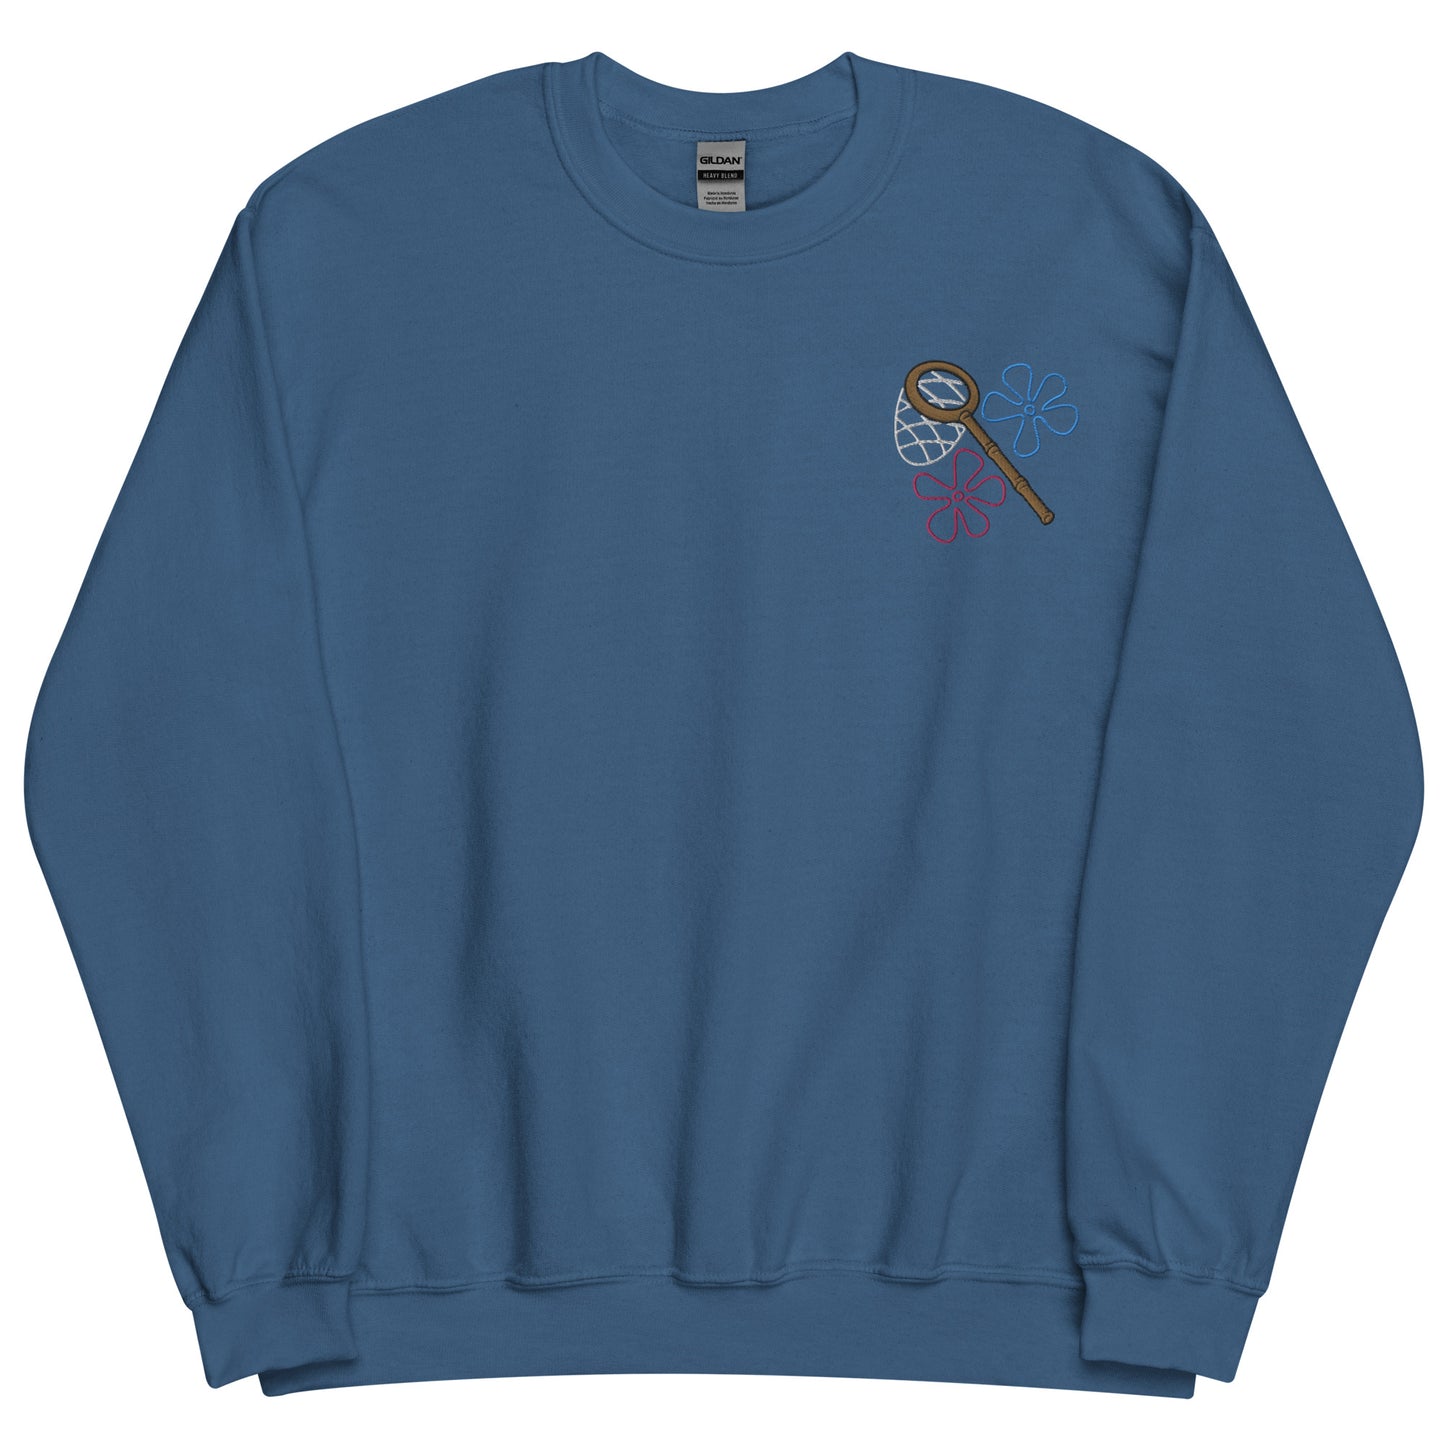 Jellyfish Net embroidered crewneck sweatshirt